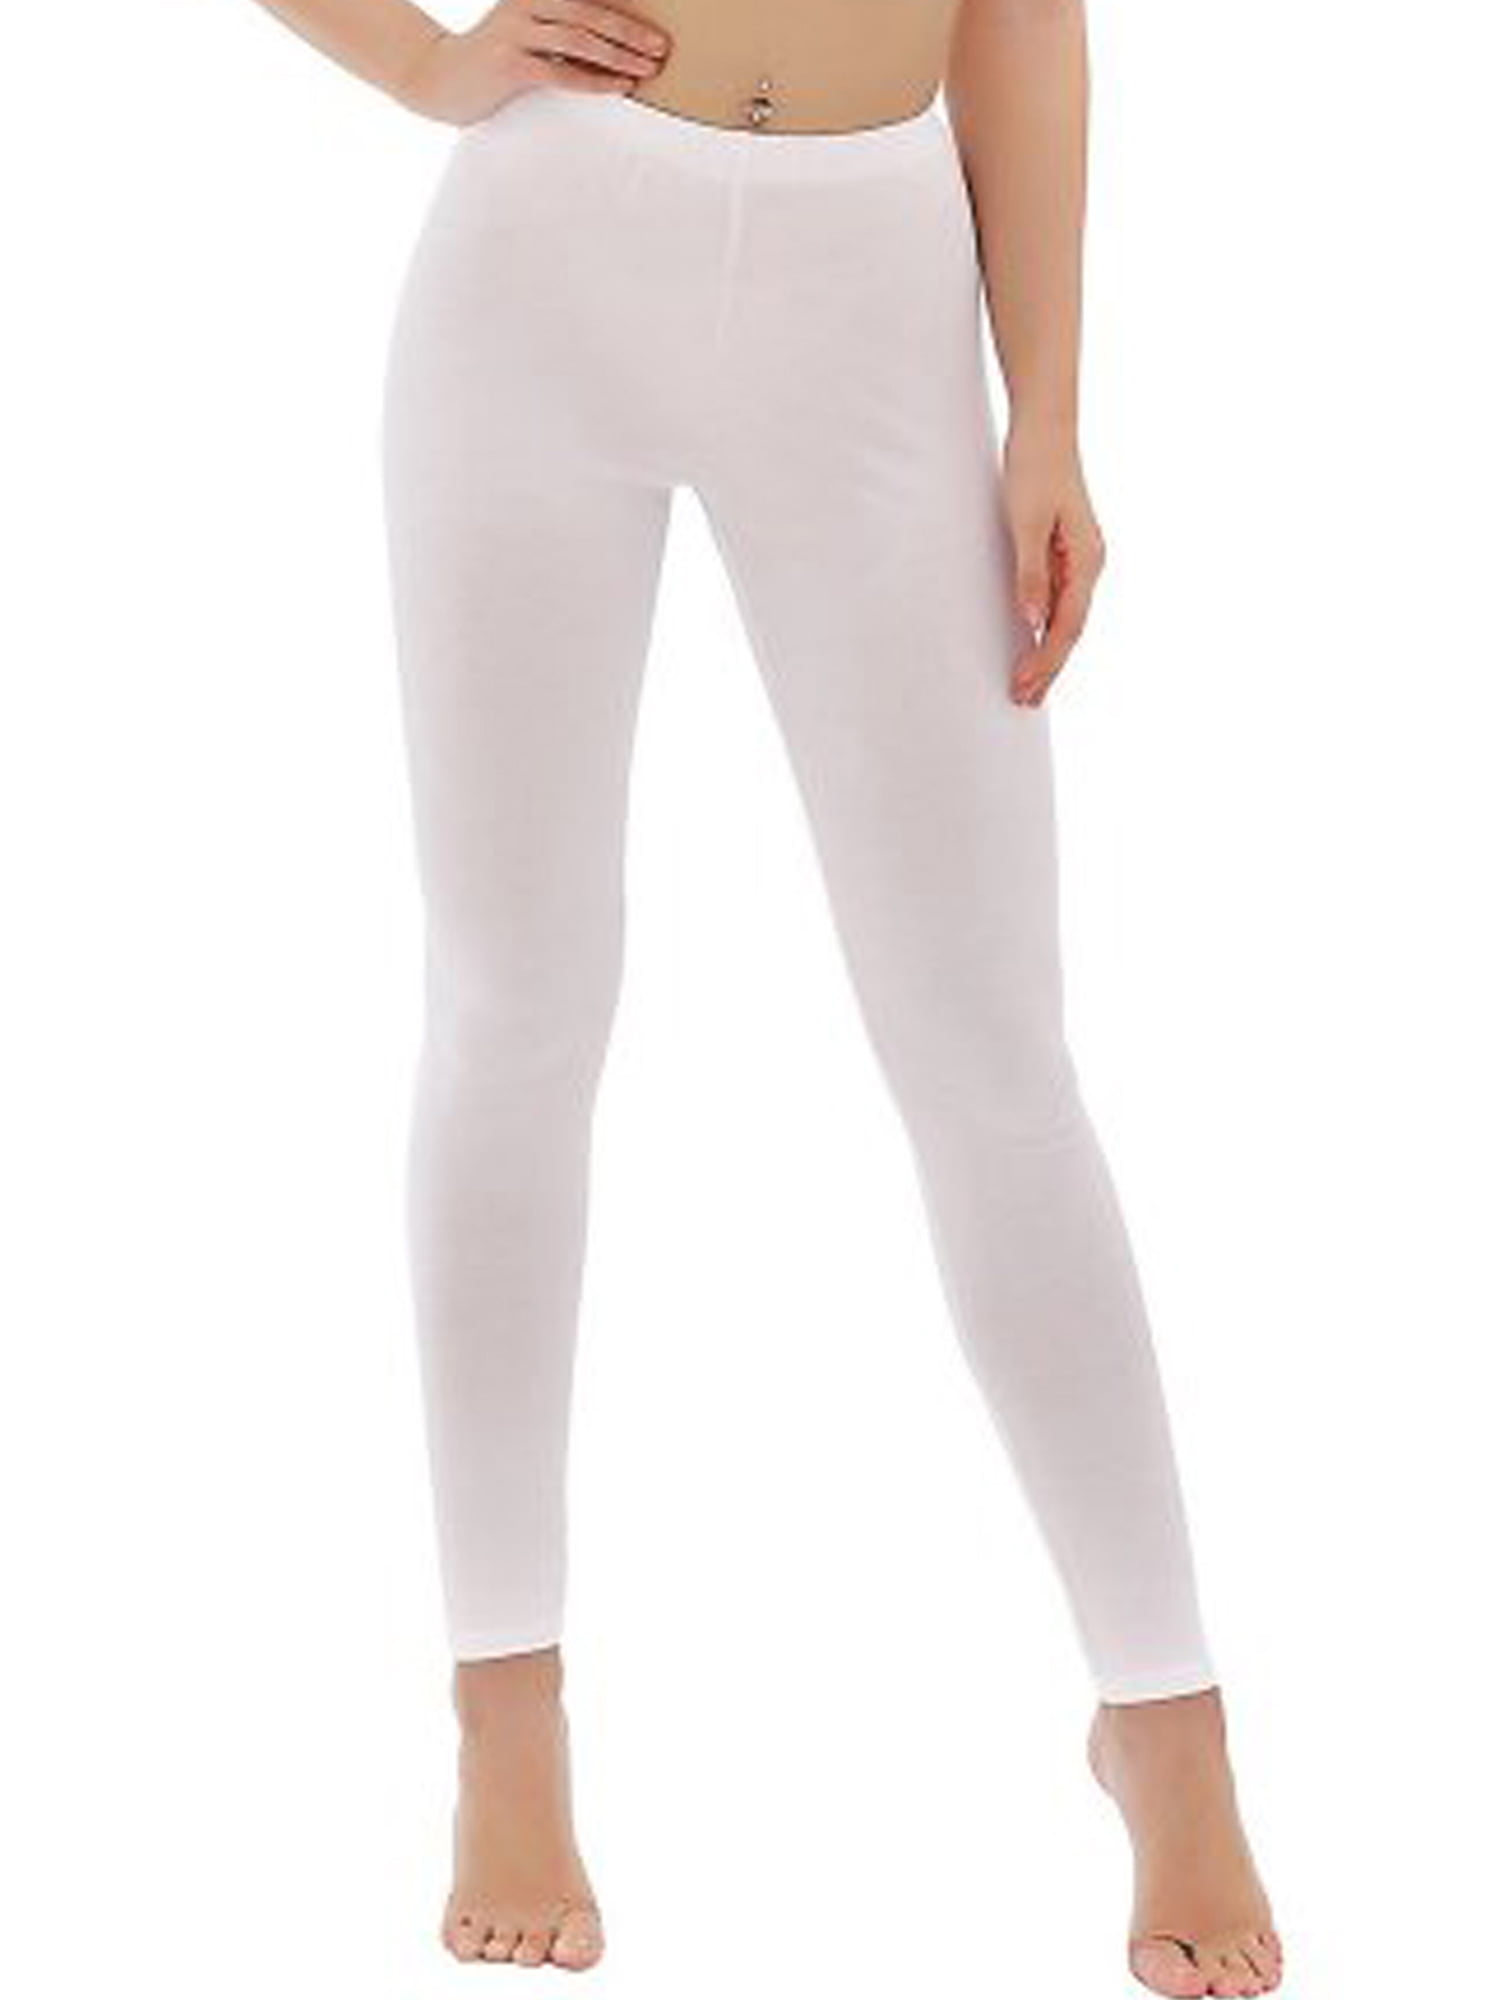 Lelinta Leggings Seamless Footless Stretch Women Yoga Pants Polyeseter And Spandex White Walmart